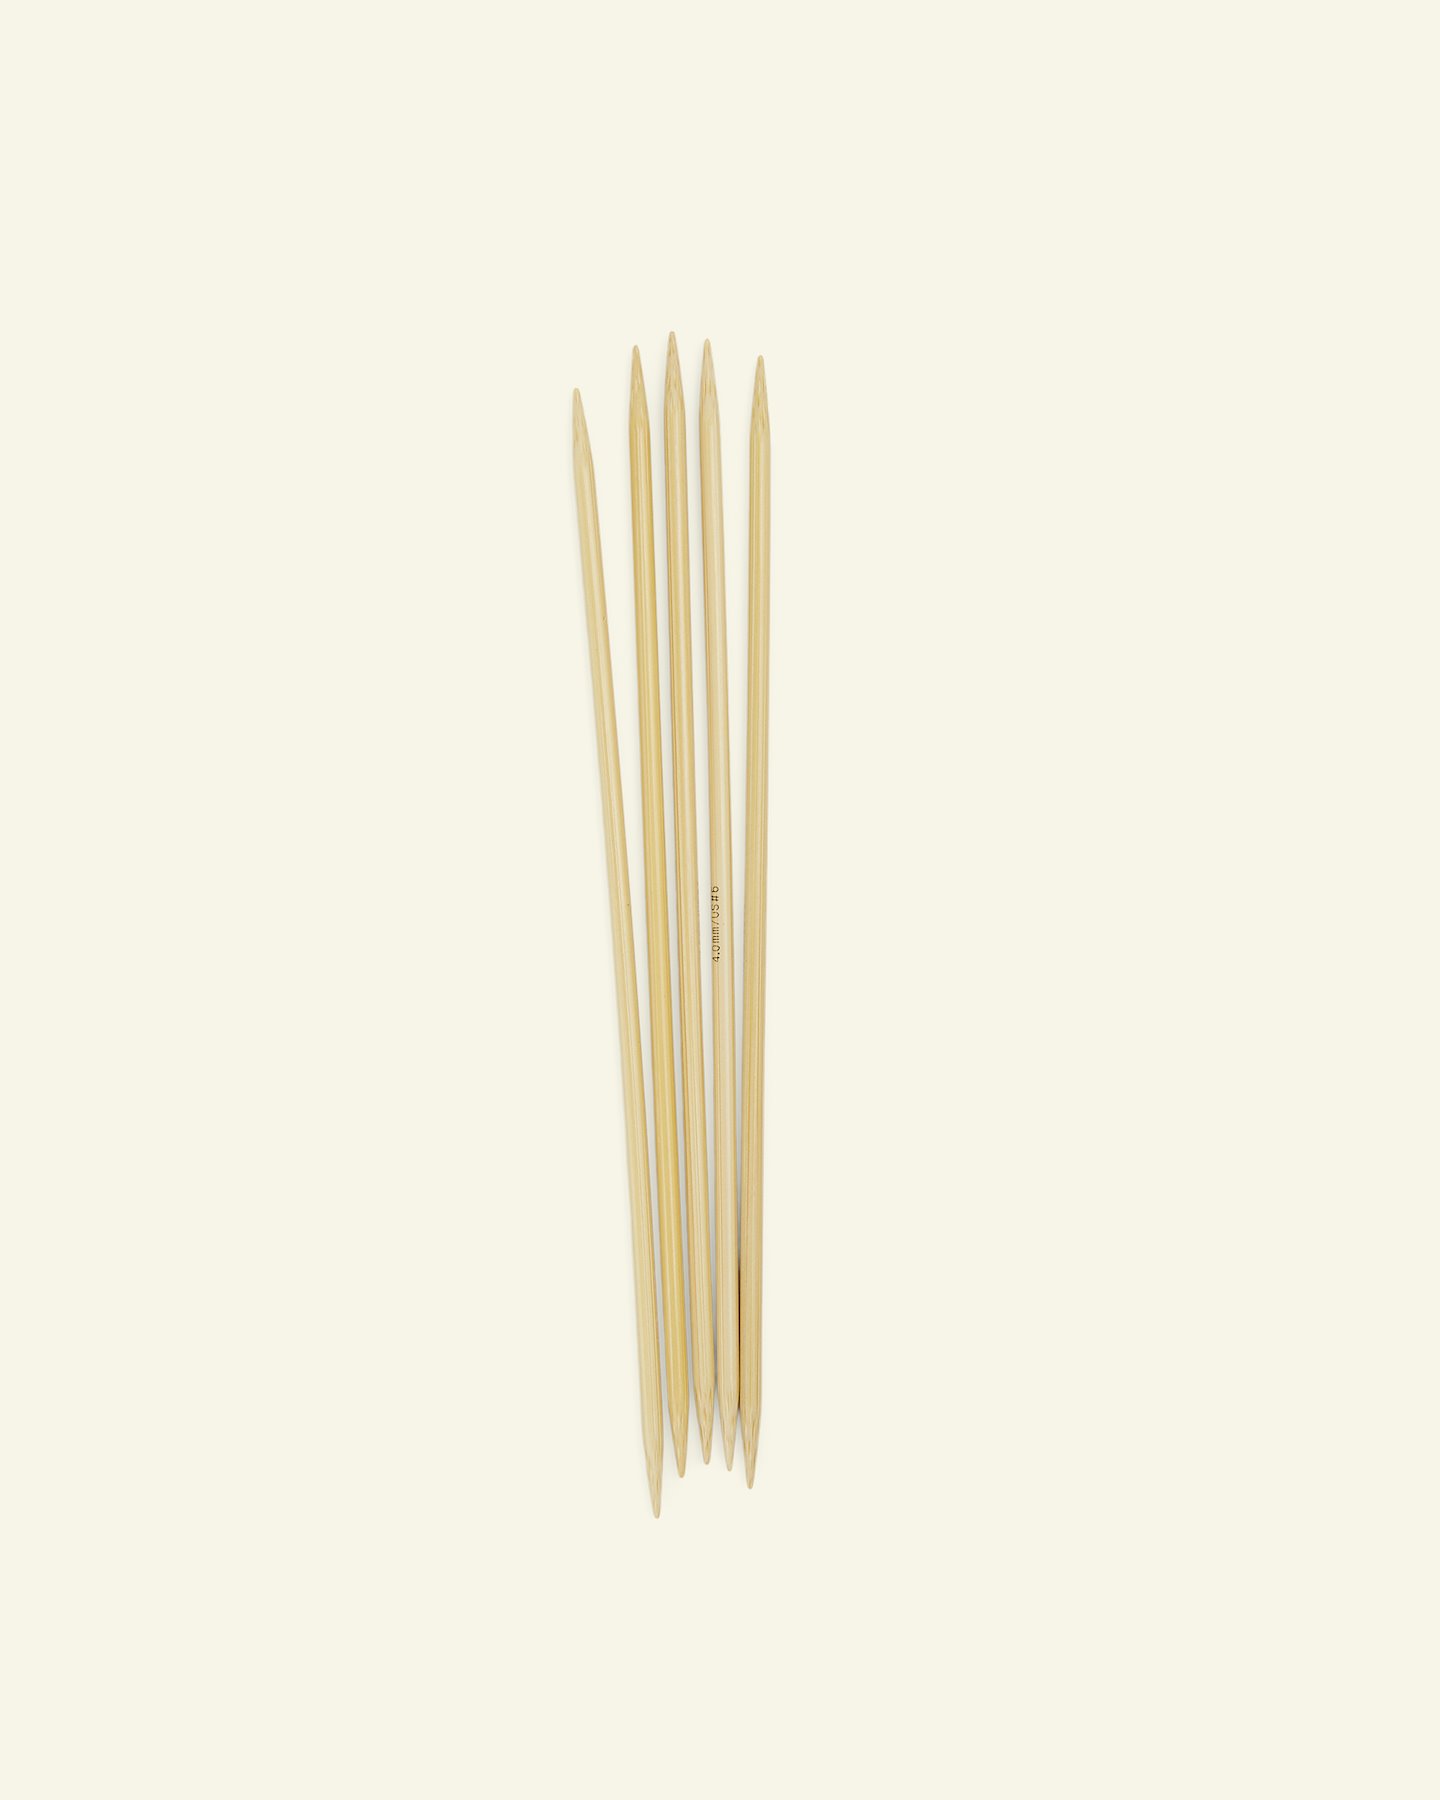 Addi Strumpfstricknadel bambus 20cm 4,0m 83276_pack